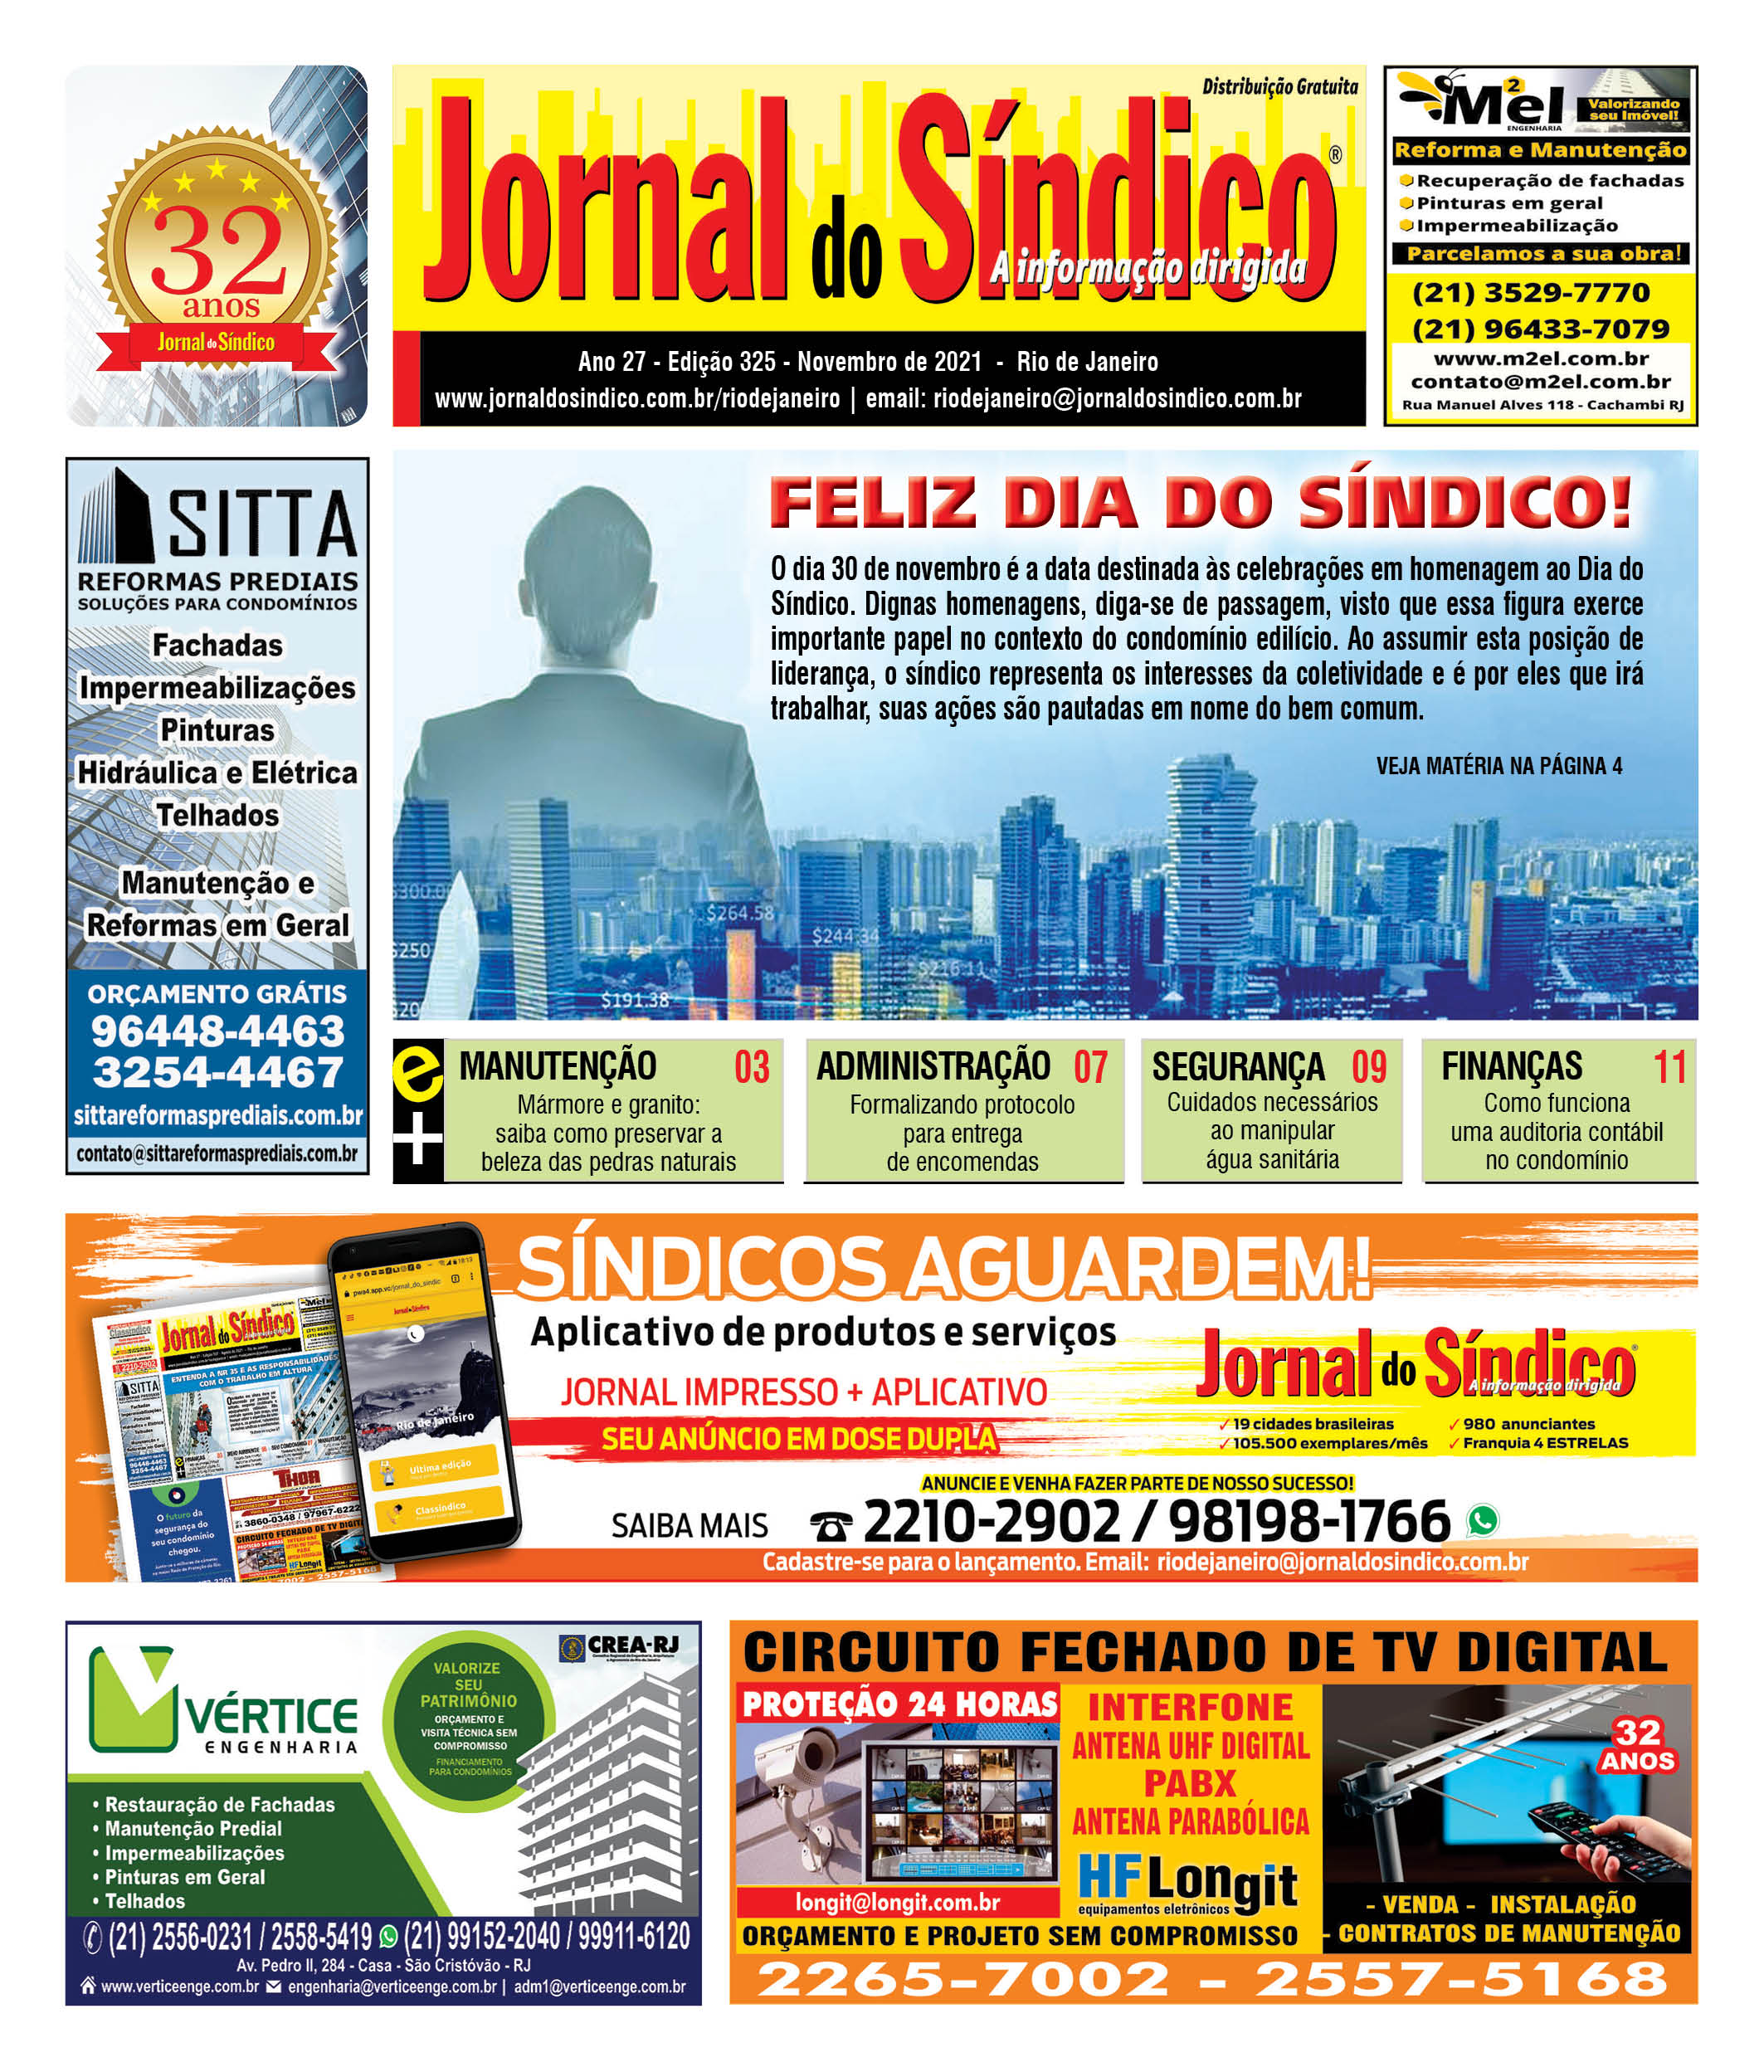 JSRJ 325 - NOVEMBRO 2021 - 12 paginas_Tribuna